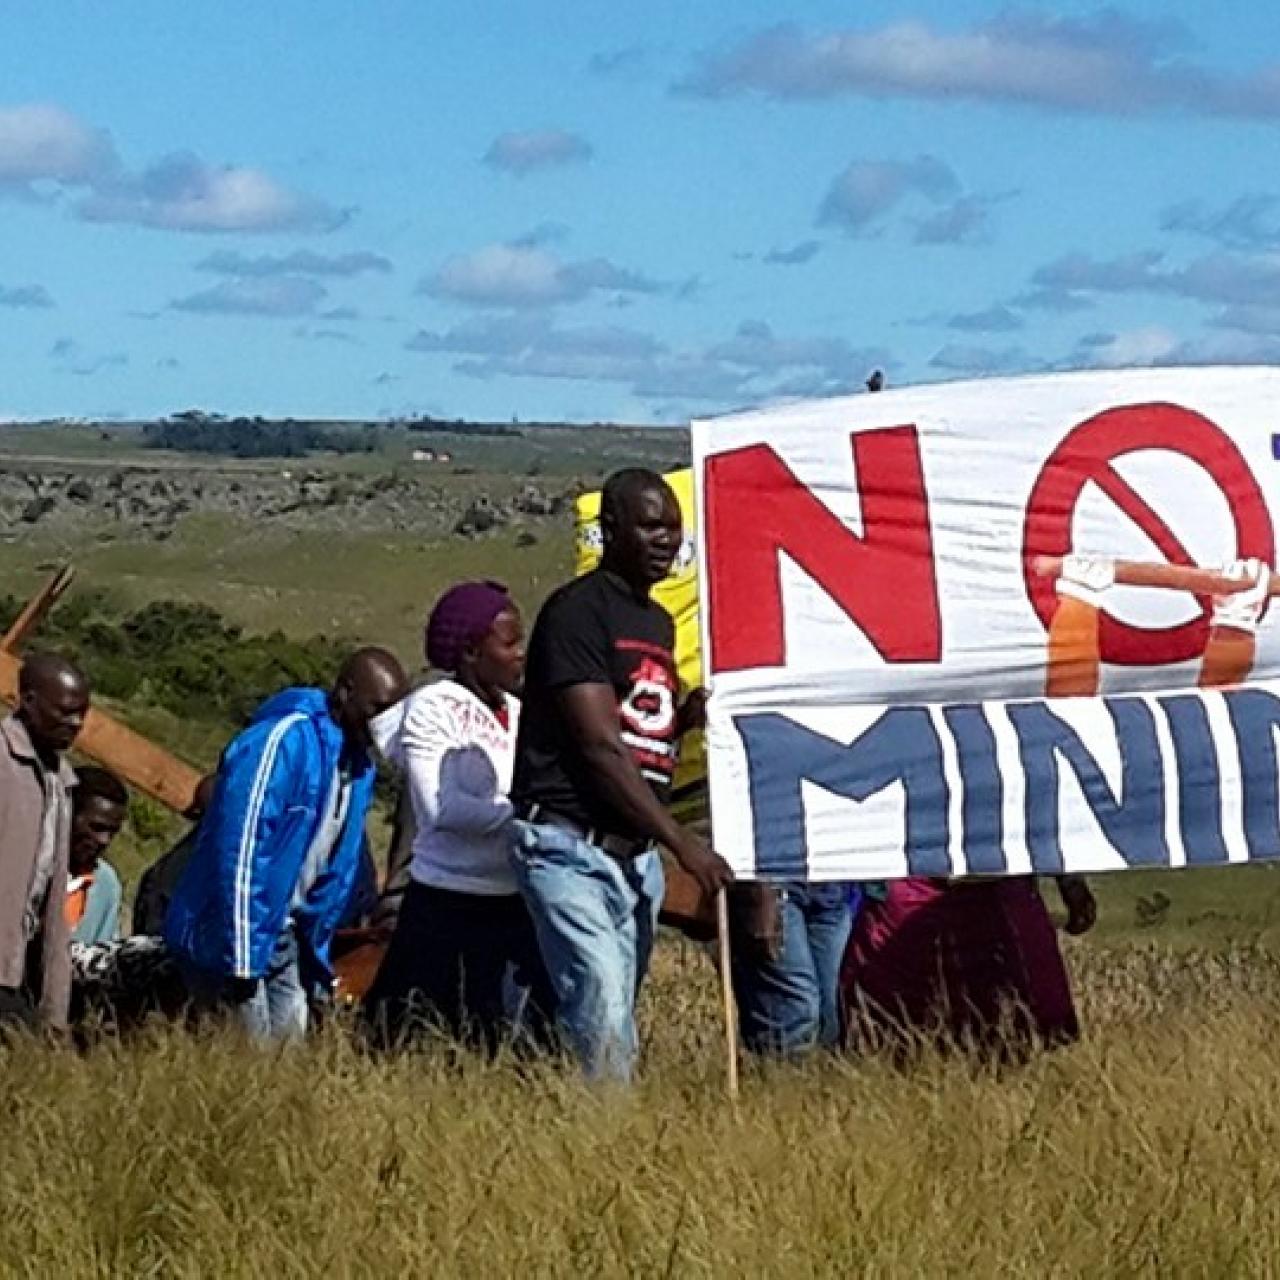 NO to mining!